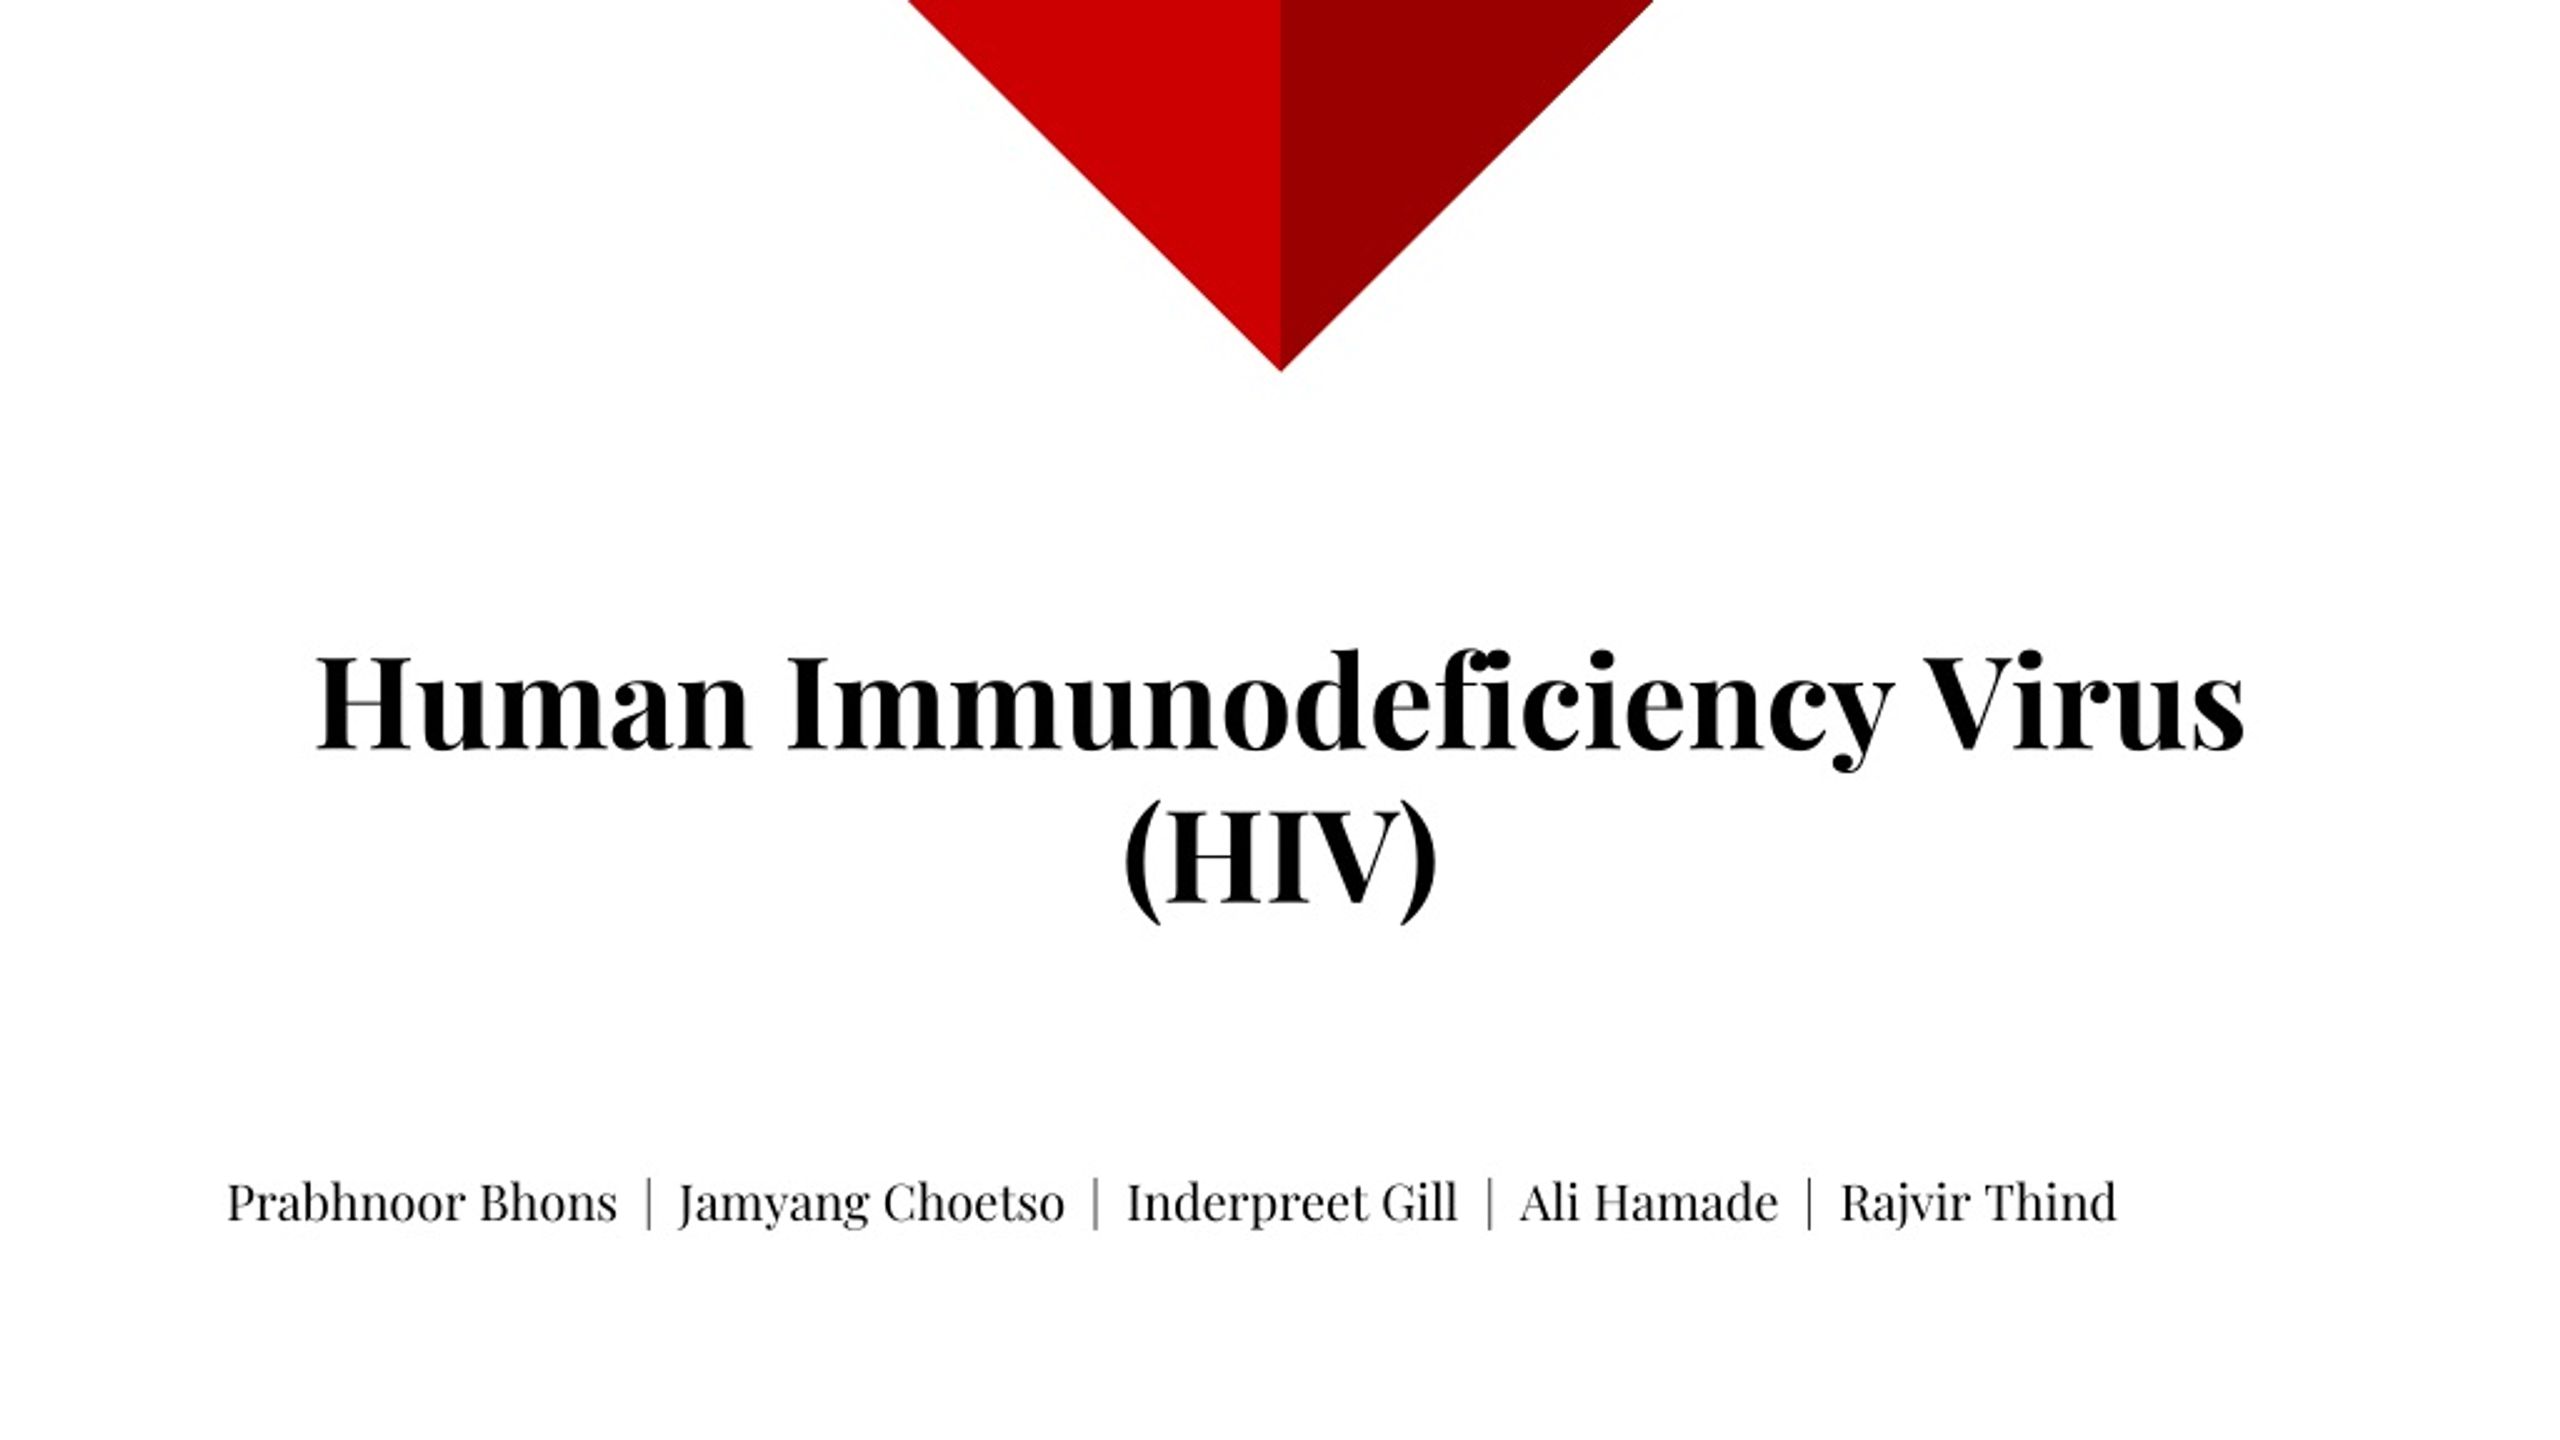 EASYCATALOG. Human immunodeficiency